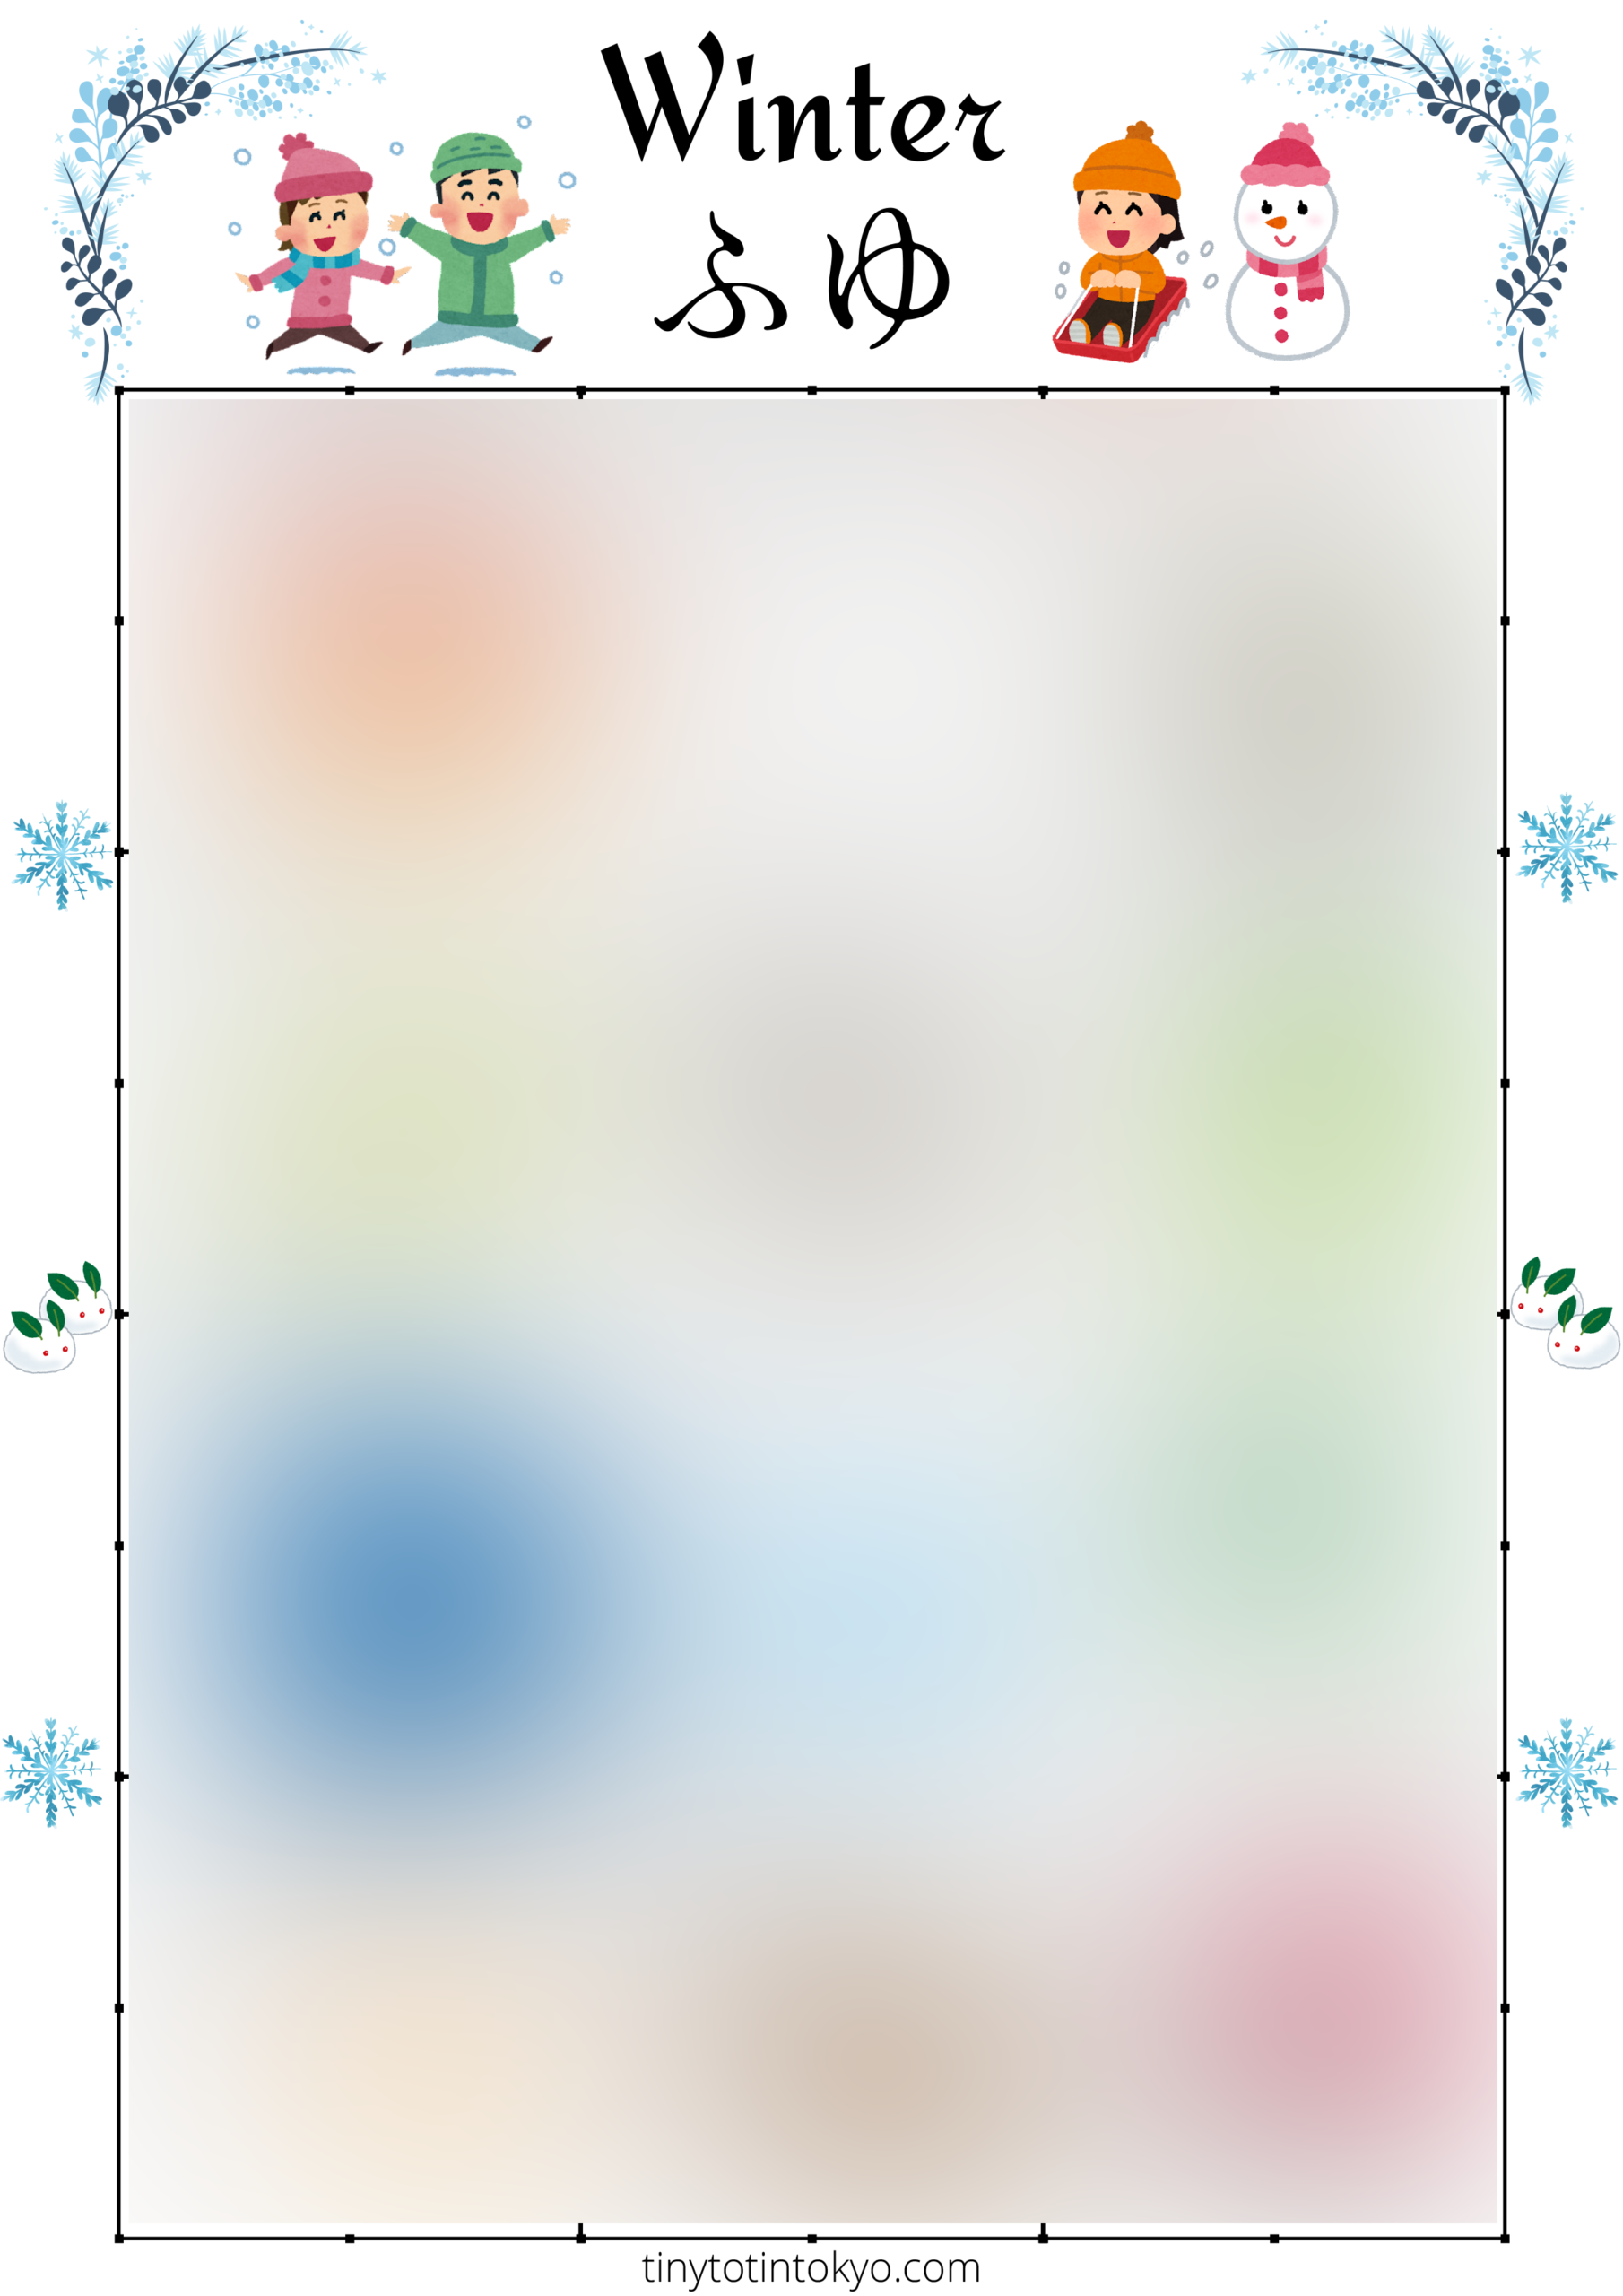 Bilingual Japanese-English Winter Printable_tinytotintokyo